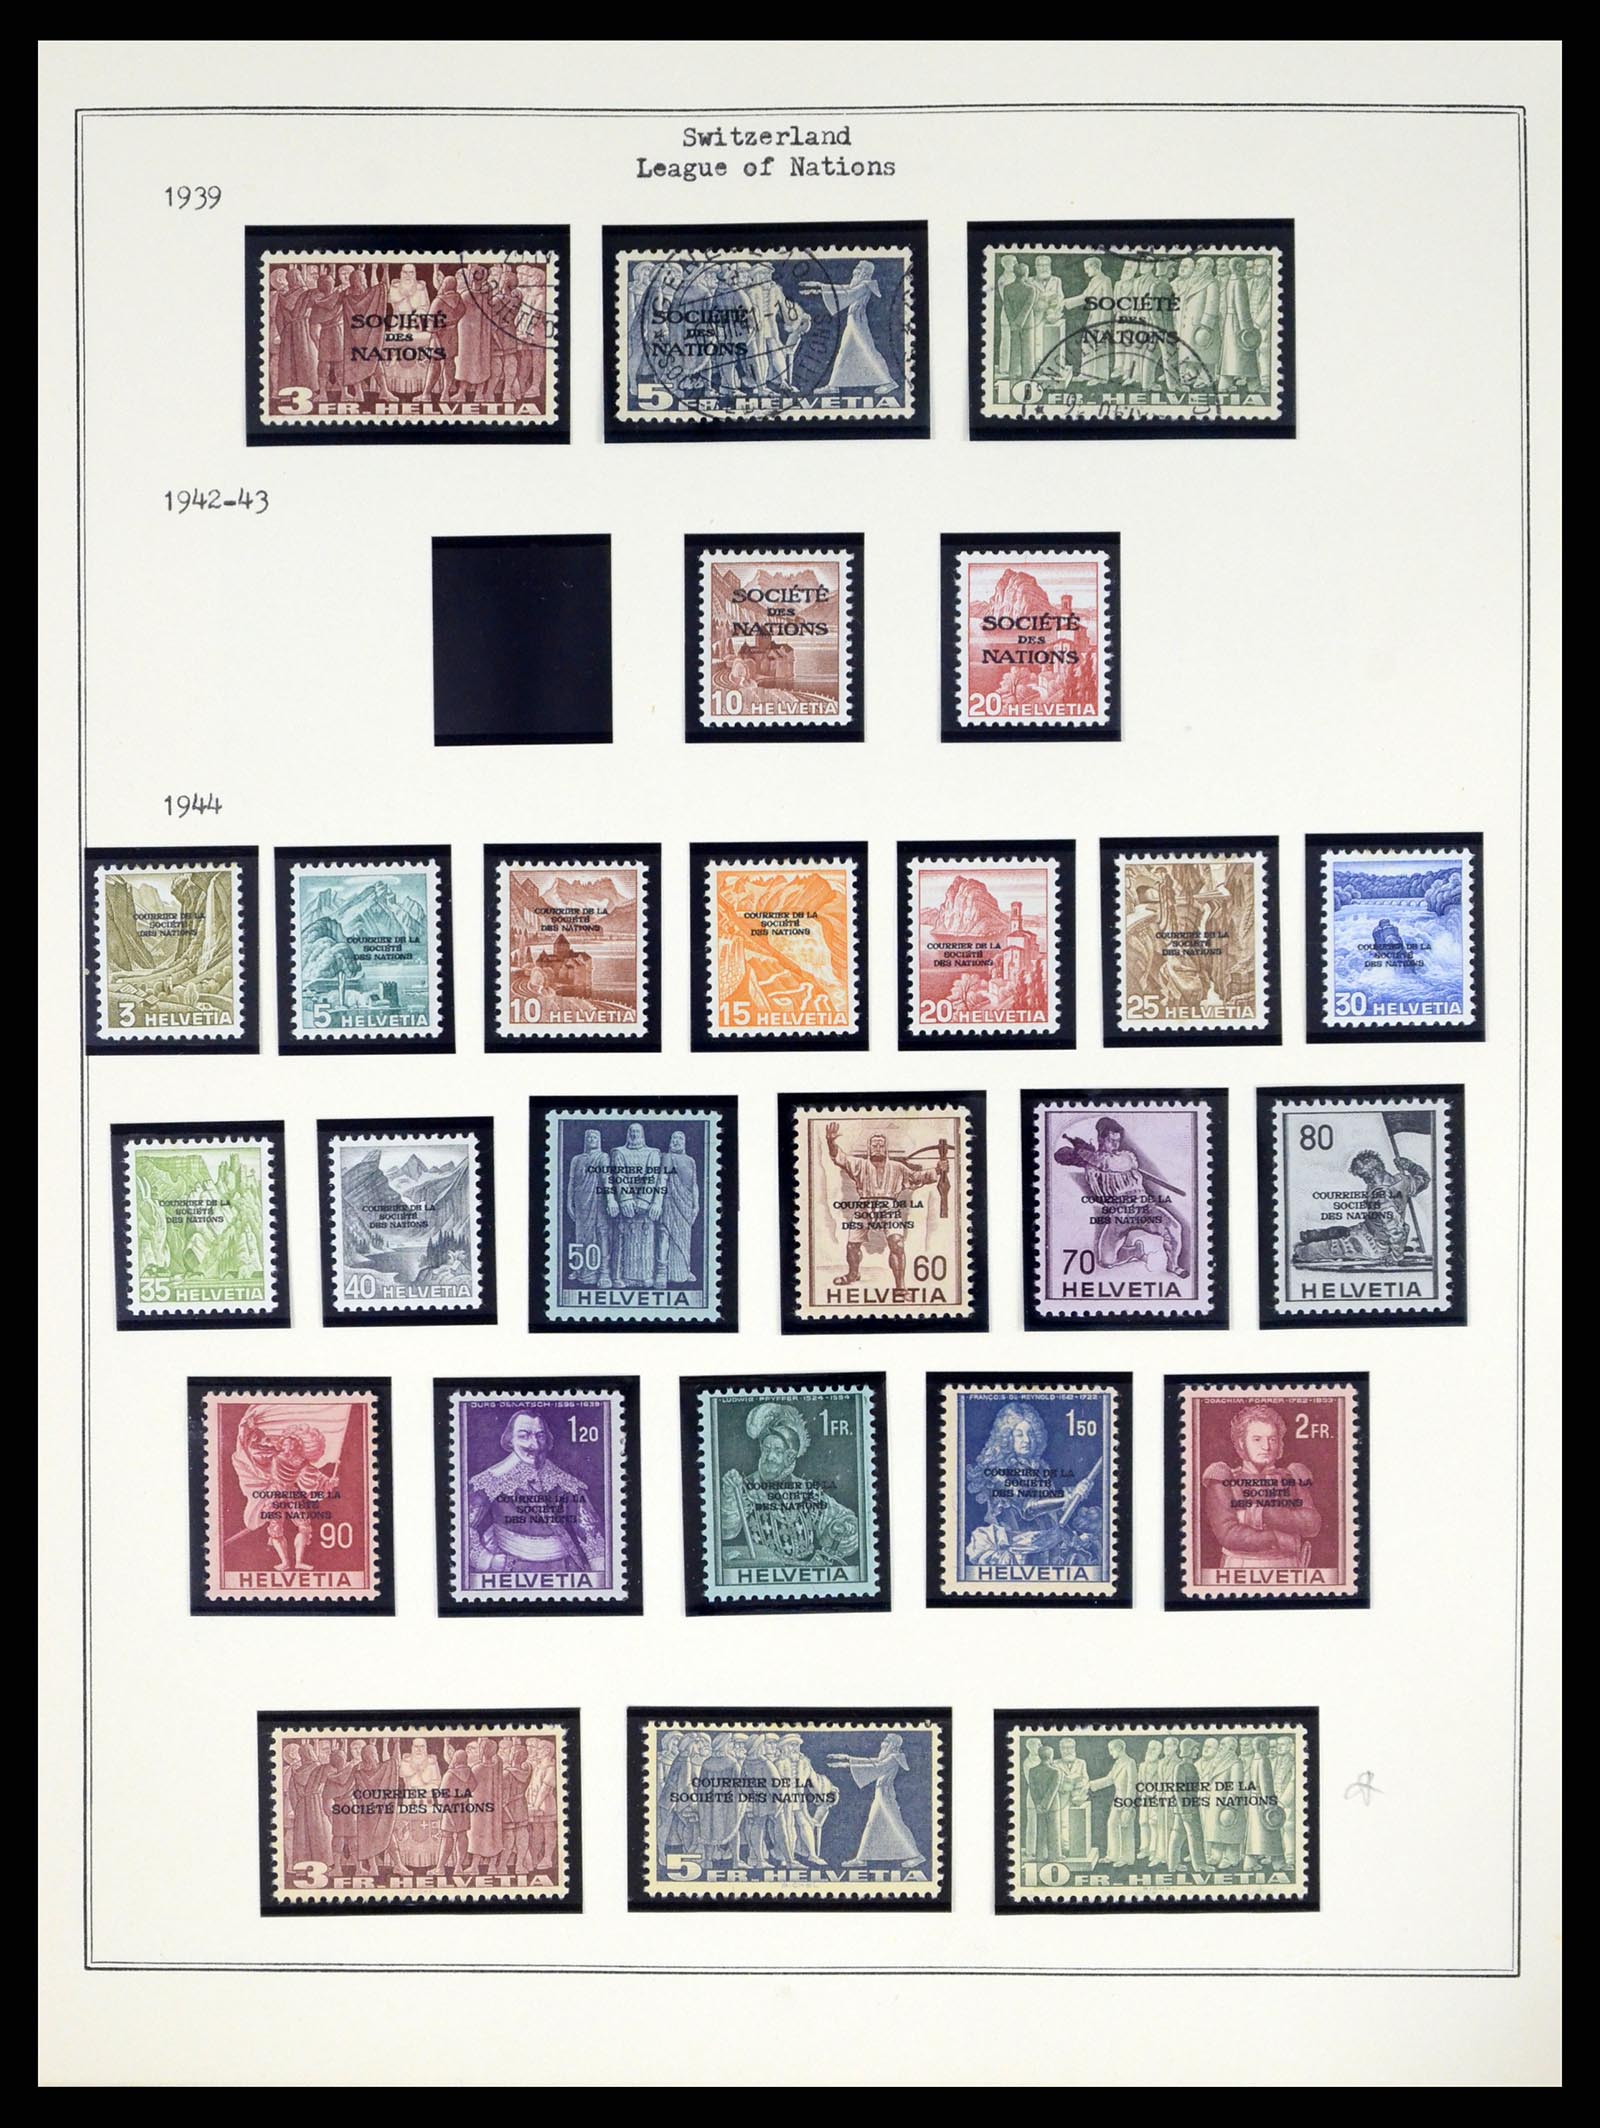 37814 003 - Stamp Collection 37814 Switzerland service 1922-1989.